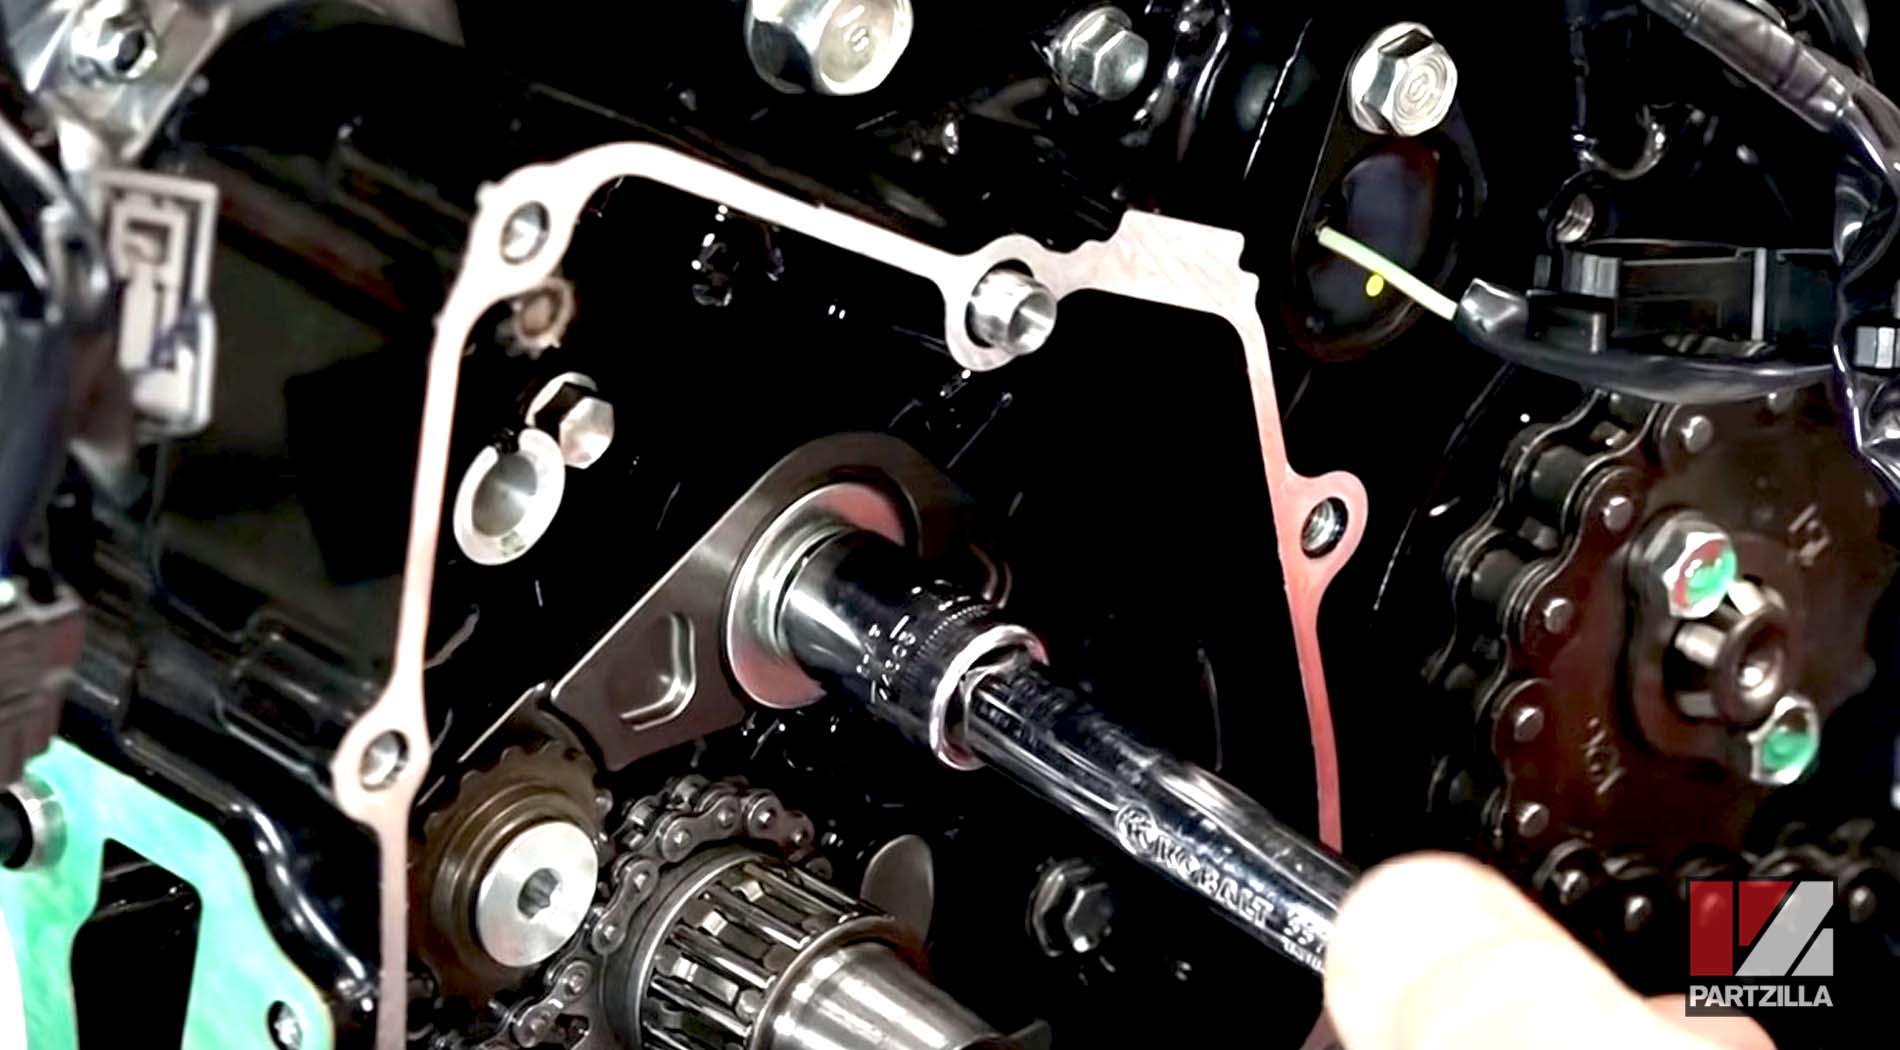 Honda Grom engine rebuild chain tensioner